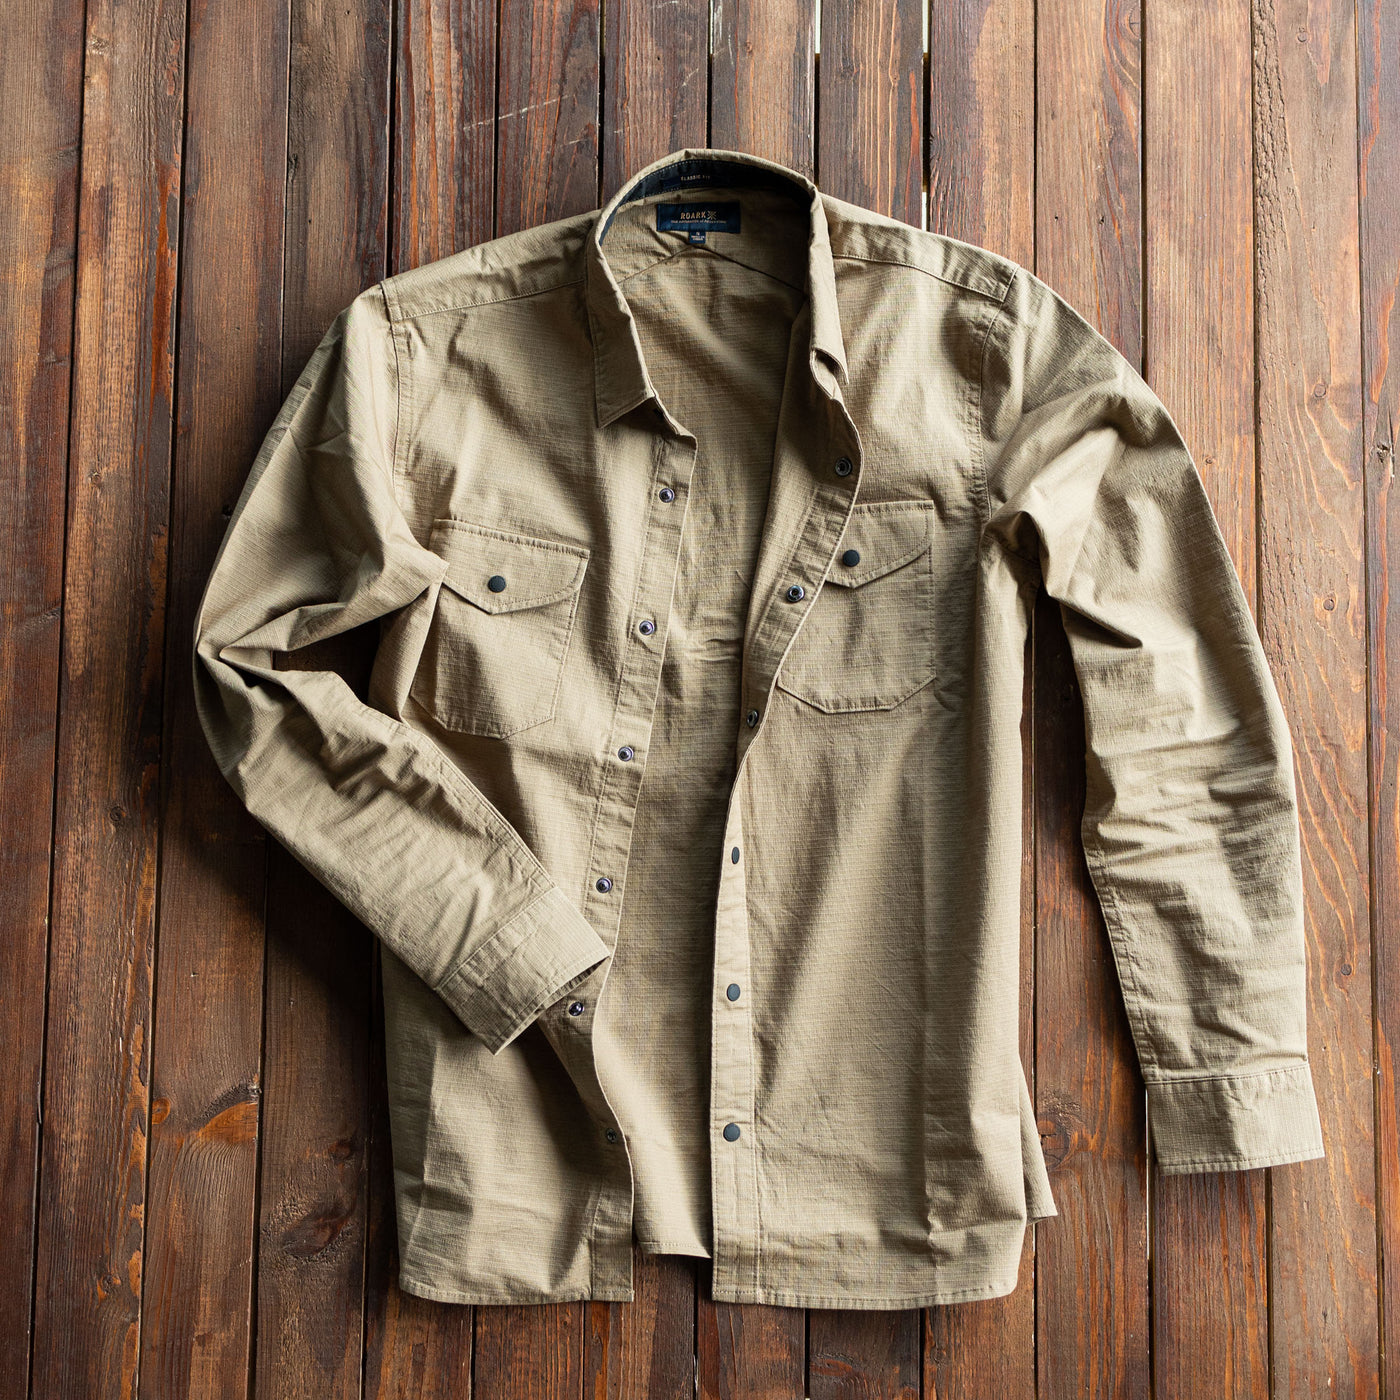 Roark - Campover - Long Sleeve Shirt - Khaki